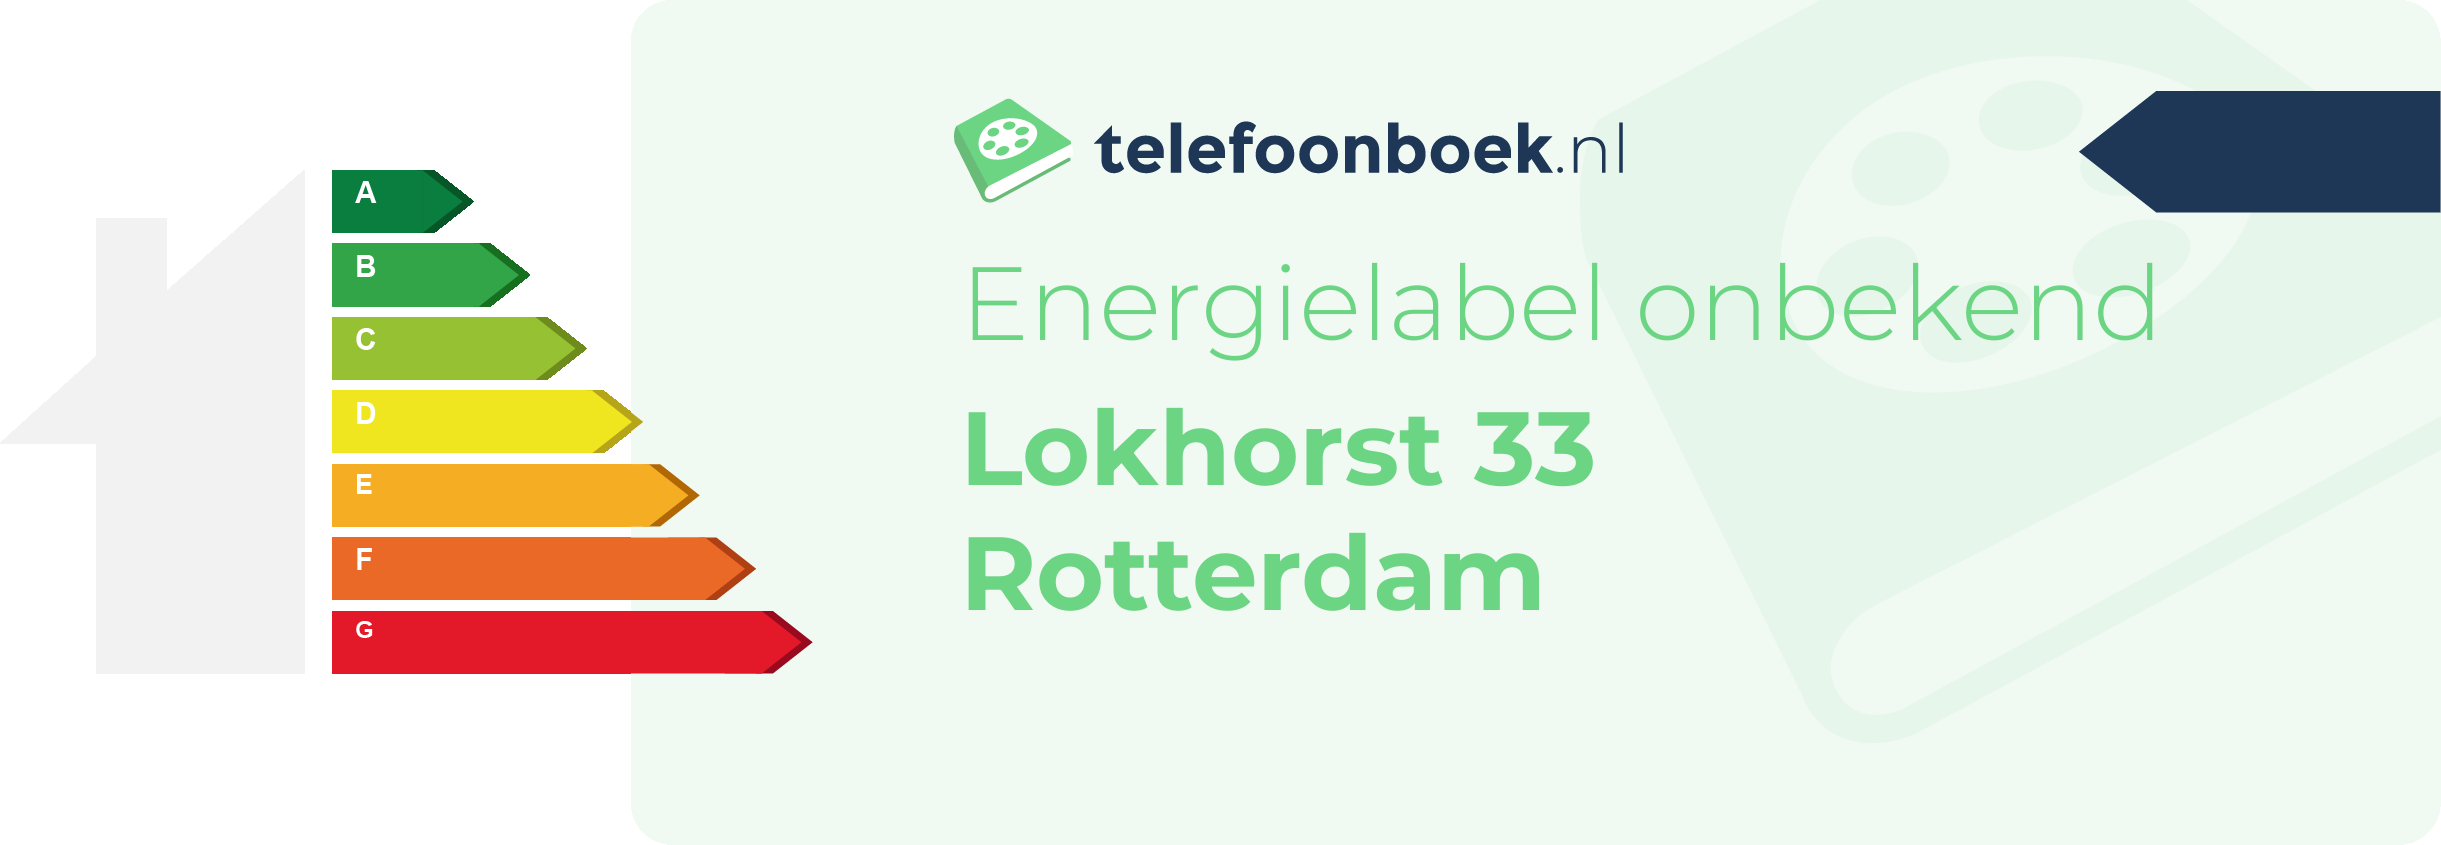 Energielabel Lokhorst 33 Rotterdam